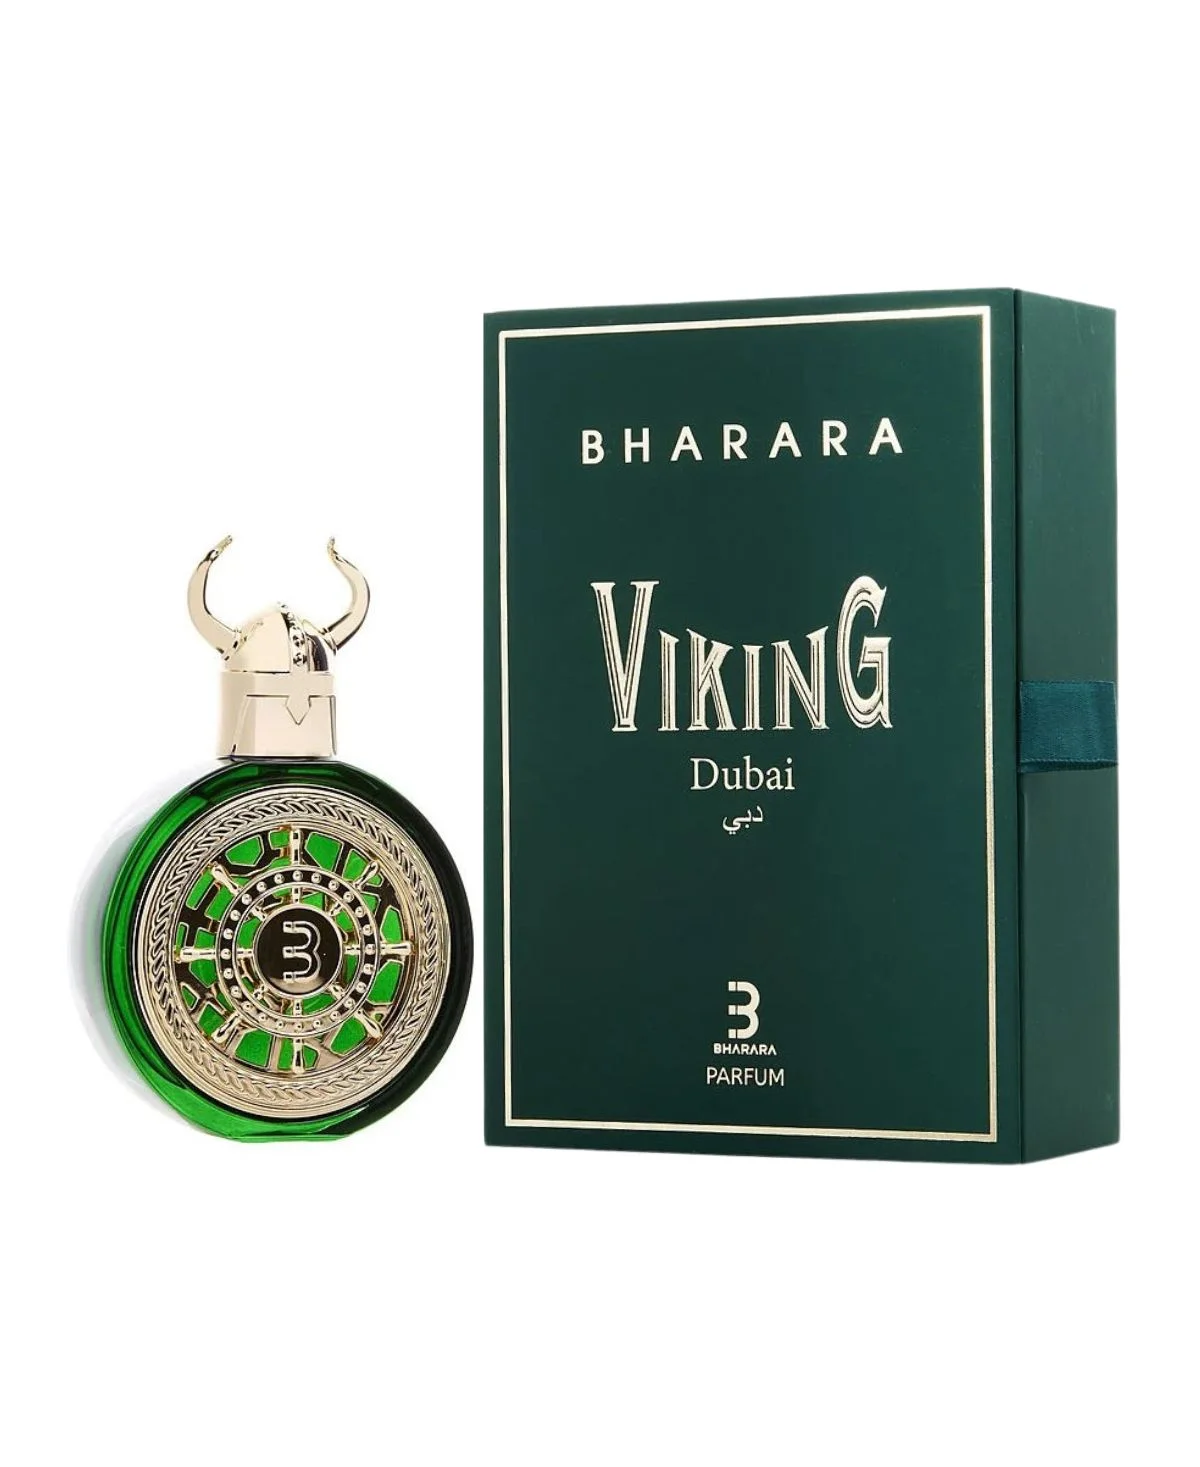 Bharara Viking Dubai for Unisex Eau de Parfum (EDP) Spray 3.4 oz (100 ml) 850050062004